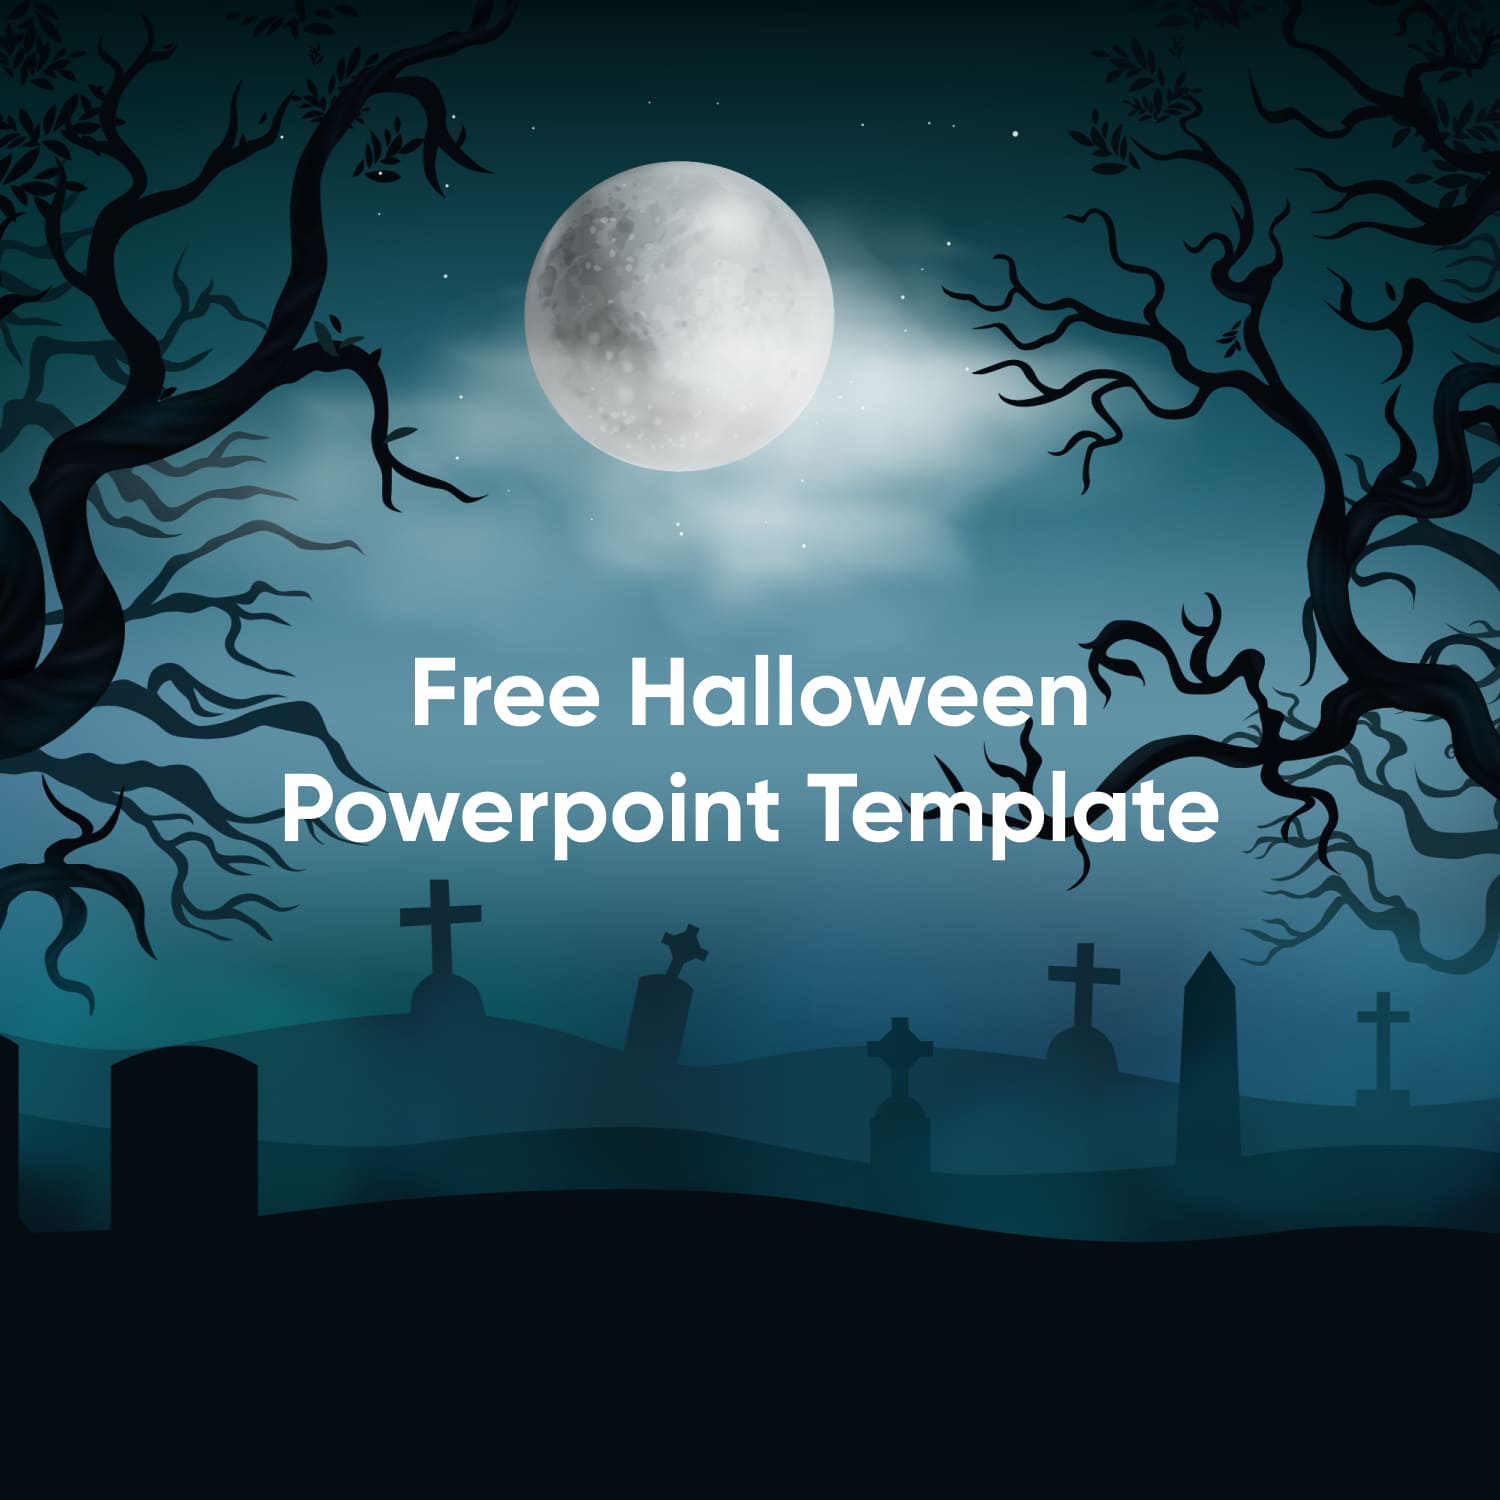 Free Halloween Powerpoint Template.